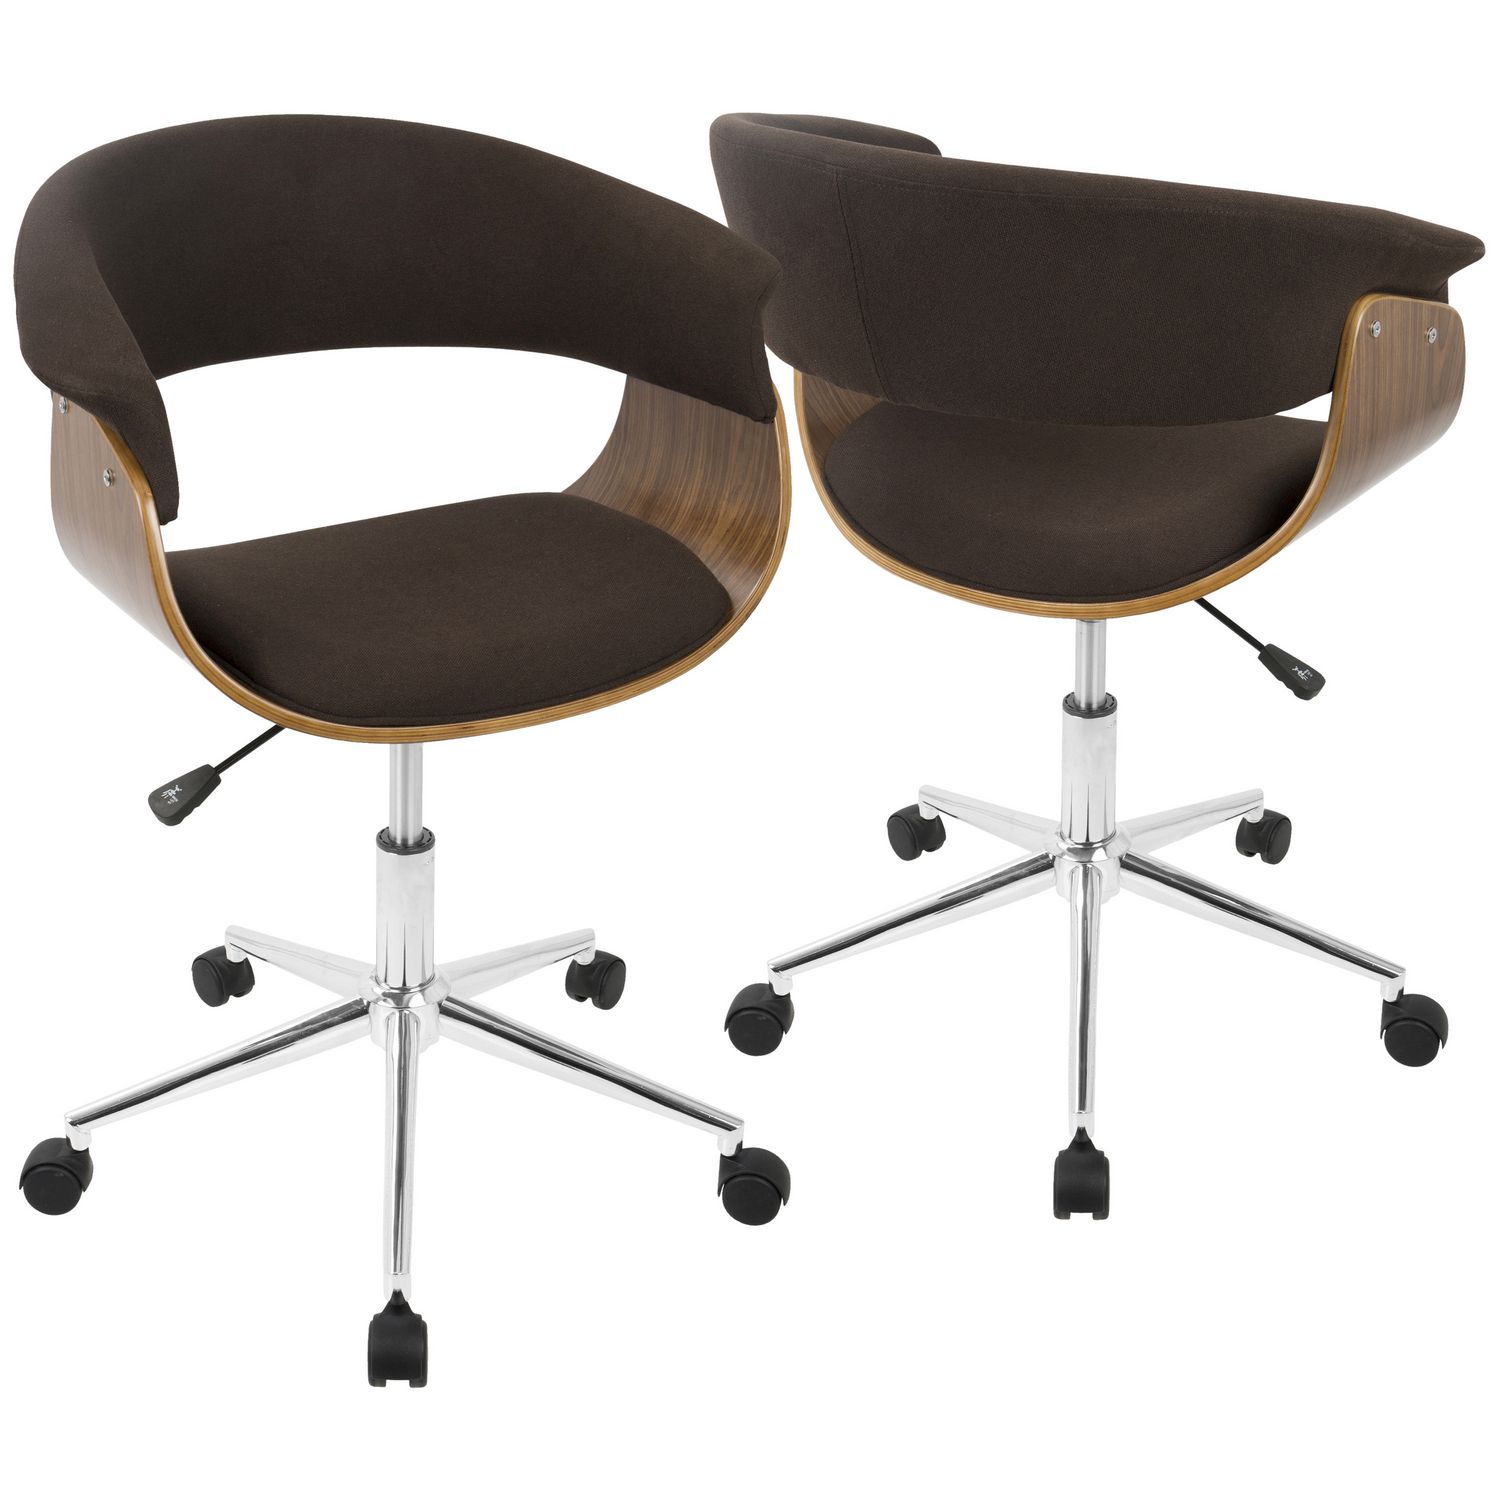 Vintage Mod Mid-Century Modern Office Chair by LumiSource | Walmart Canada